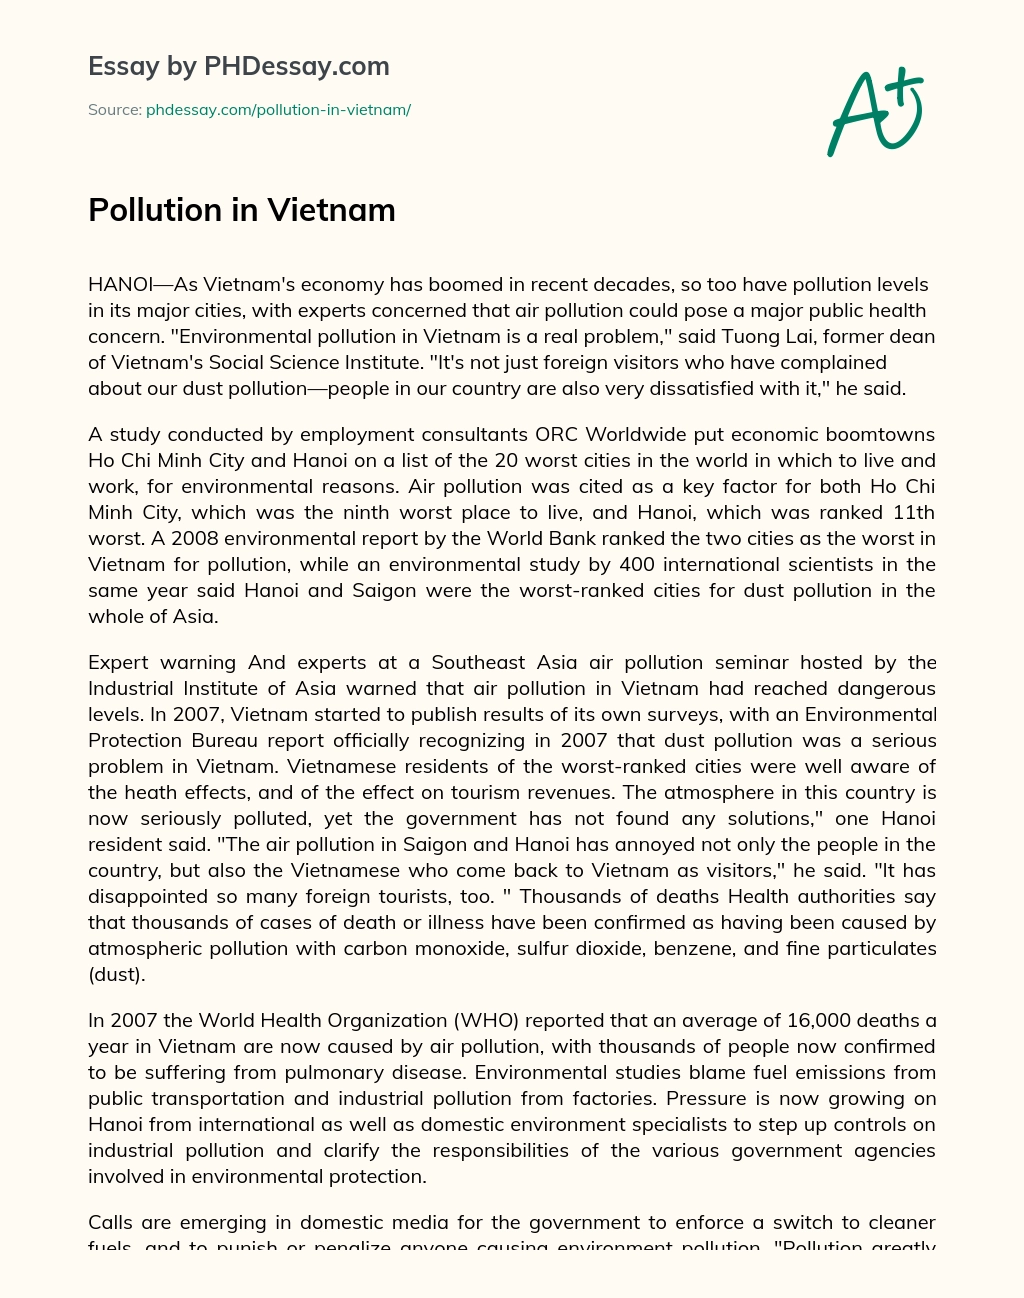 Pollution in Vietnam essay